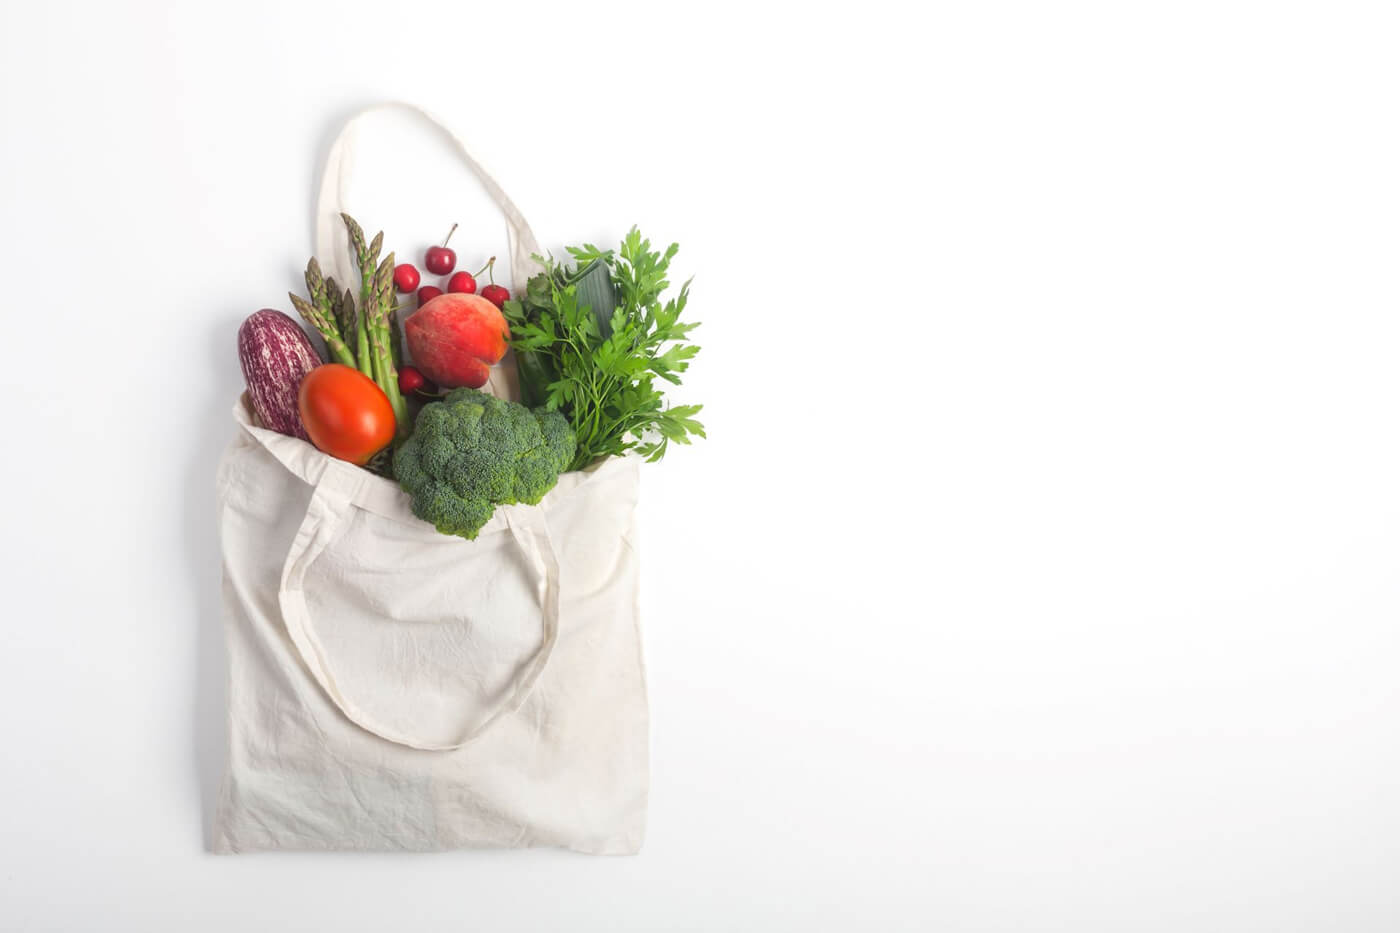 Plastic produce bags